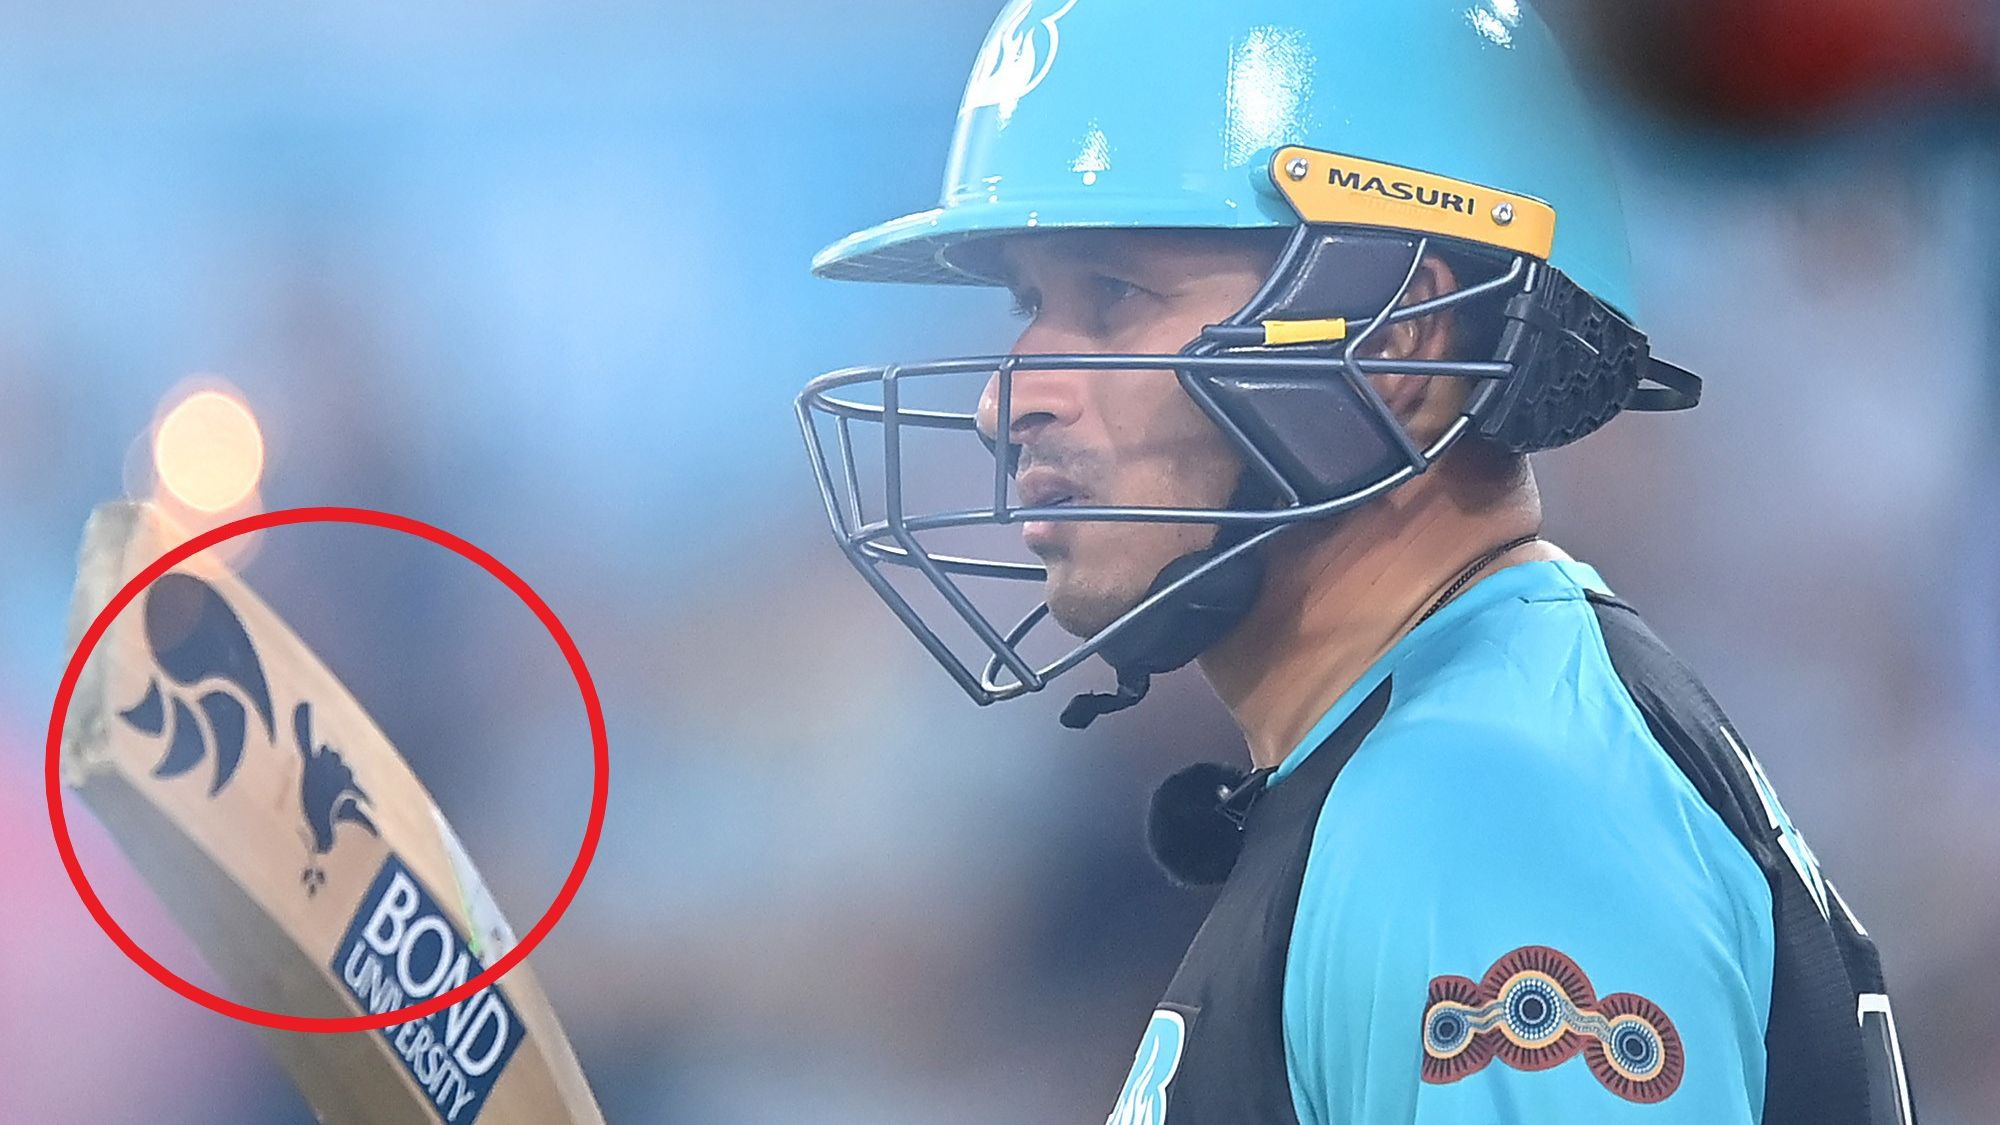 'I had no idea': Usman Khawaja's dove symbol bat awkwardly breaks after four balls